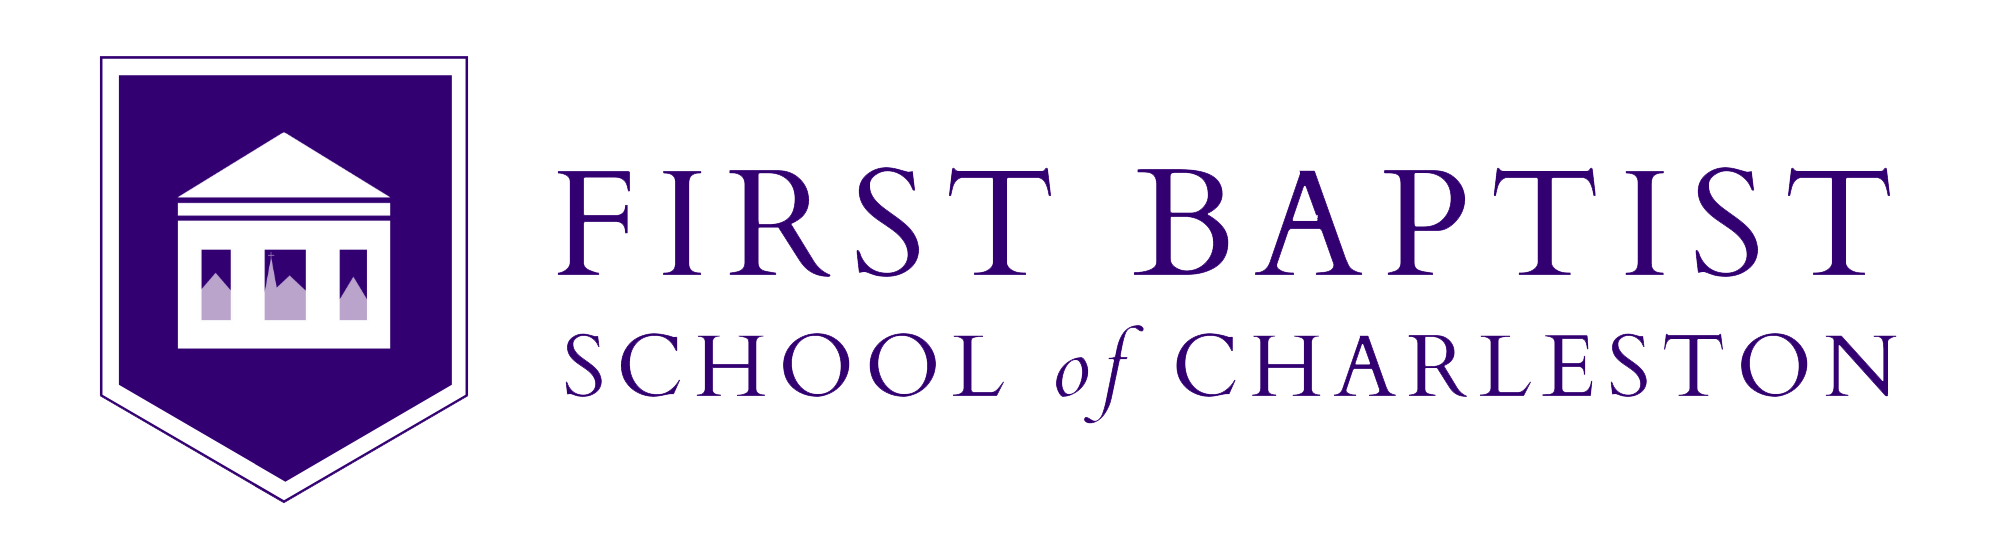 First Baptist School of Charleston logo